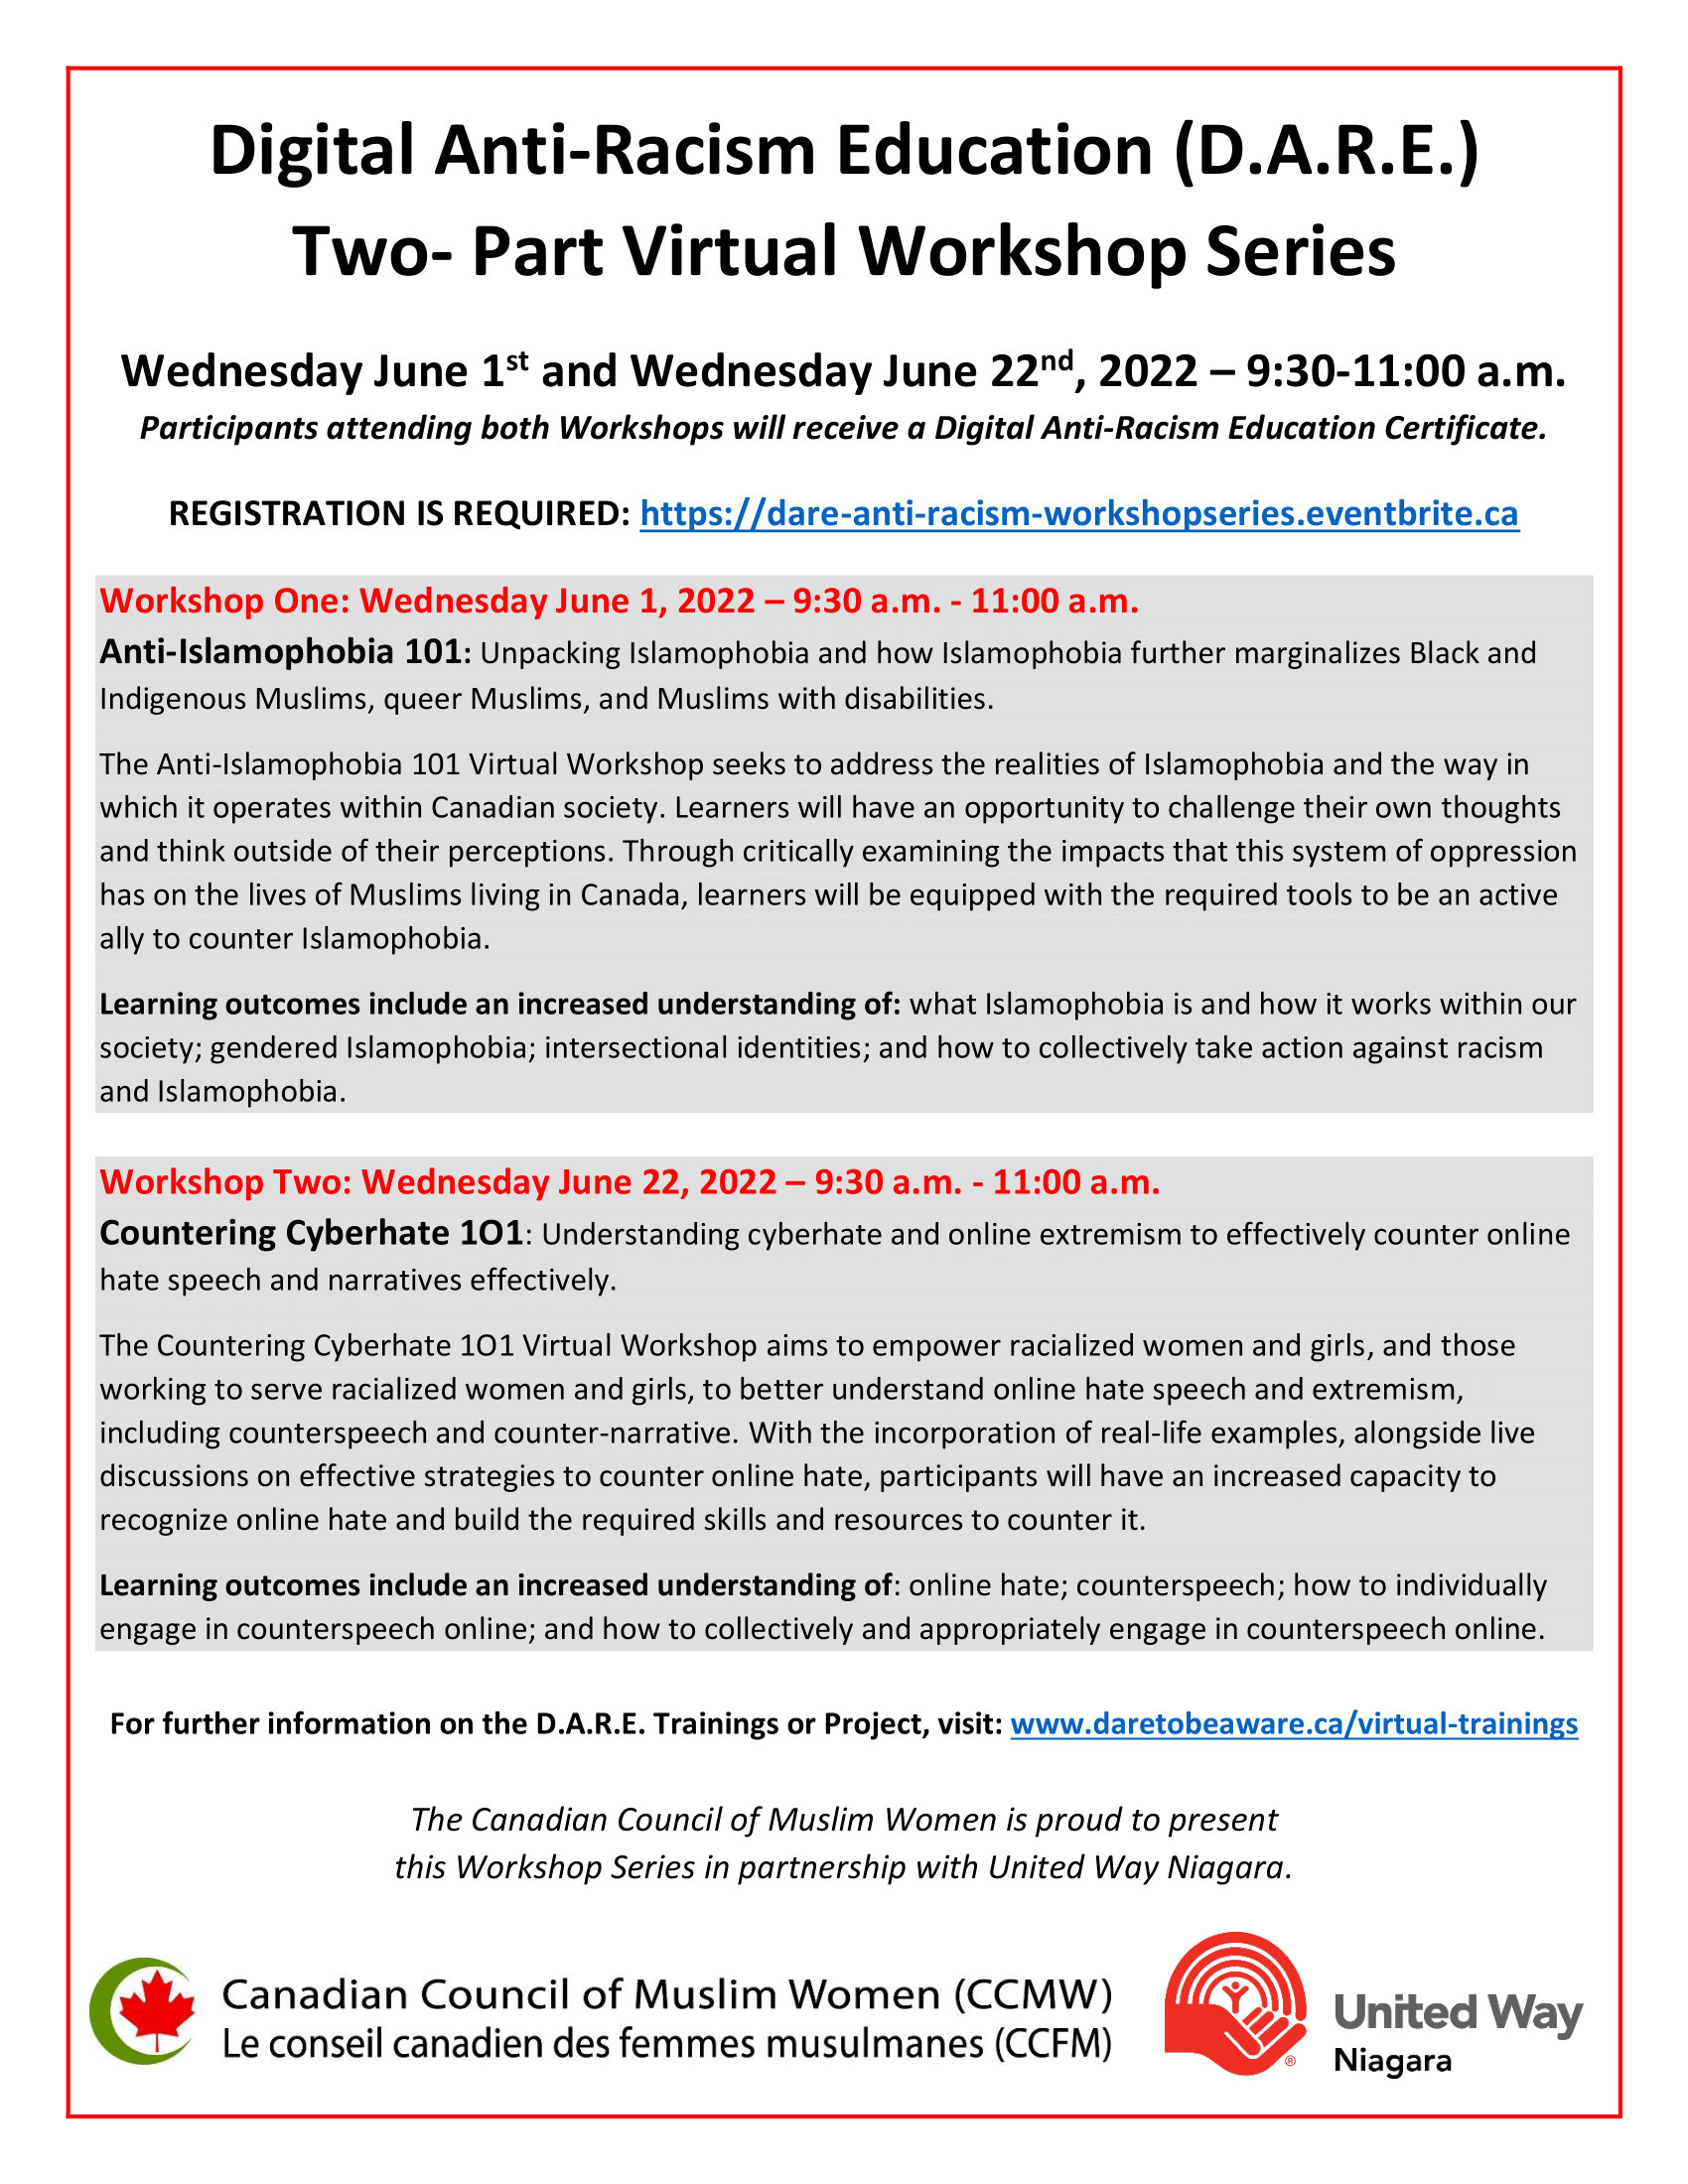 D.A.R.E. Virtual Workshop Series with United Way Niagara: Workshop 1